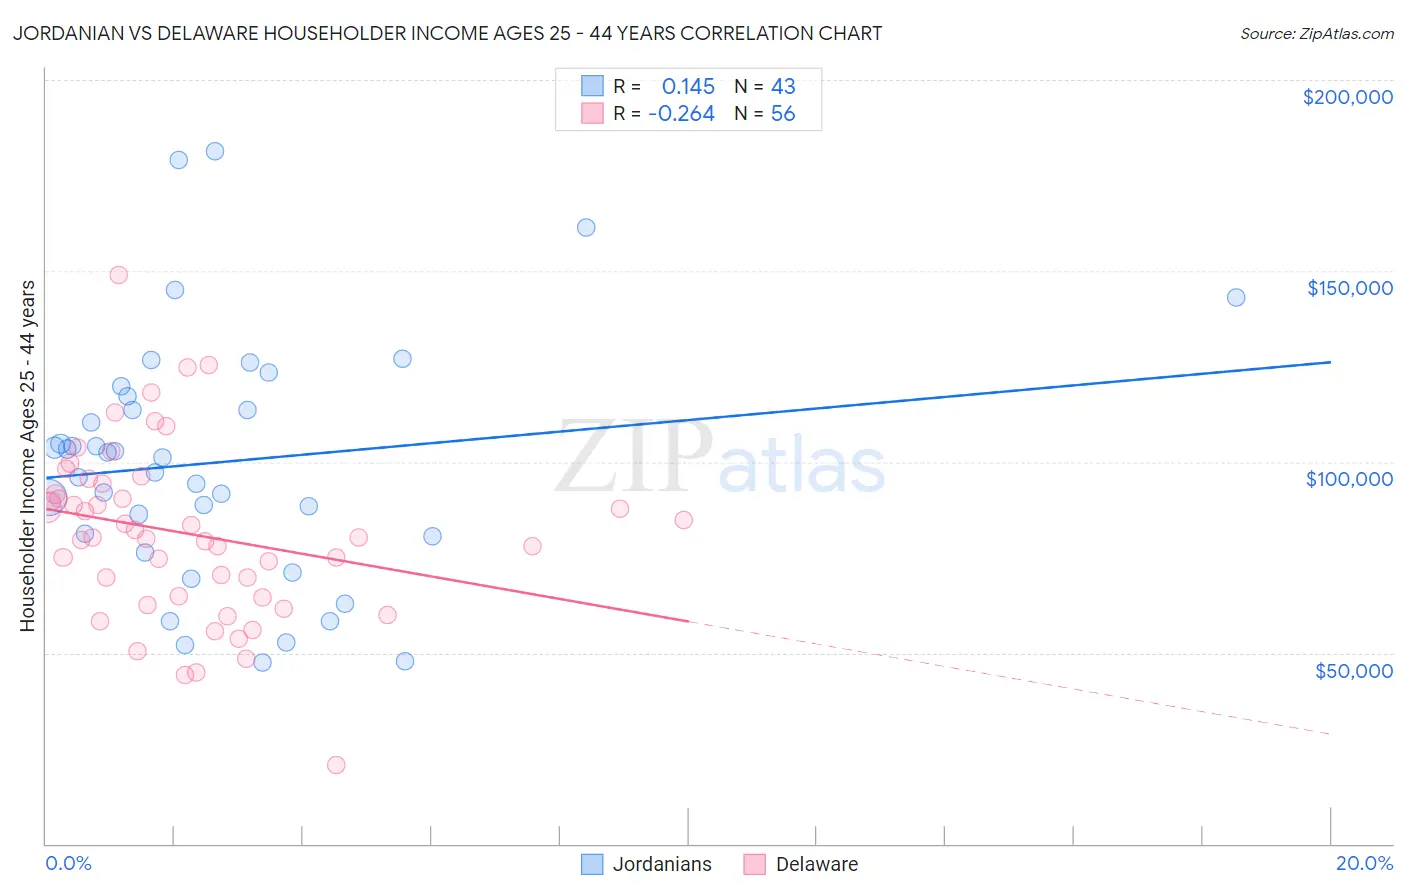 Jordanian vs Delaware Householder Income Ages 25 - 44 years